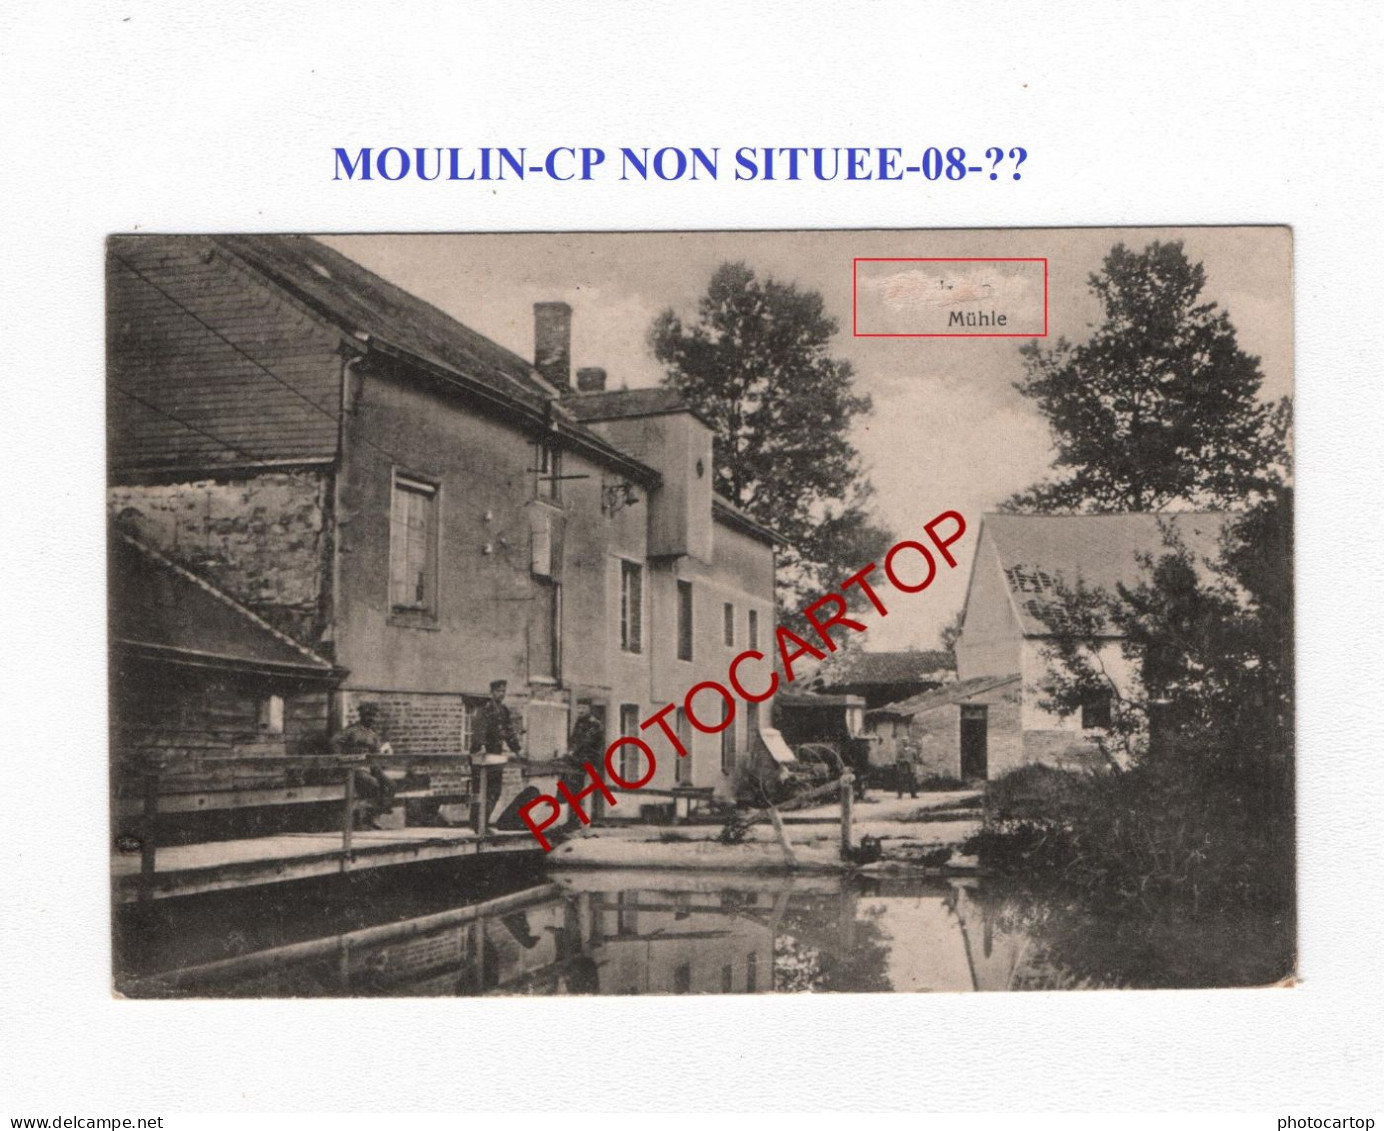 Moulin-CP NON SITUEE-08-??-CARTE Imprimee Allemande-Guerre 14-18-1 WK-France-FELDPOST - Watermolens